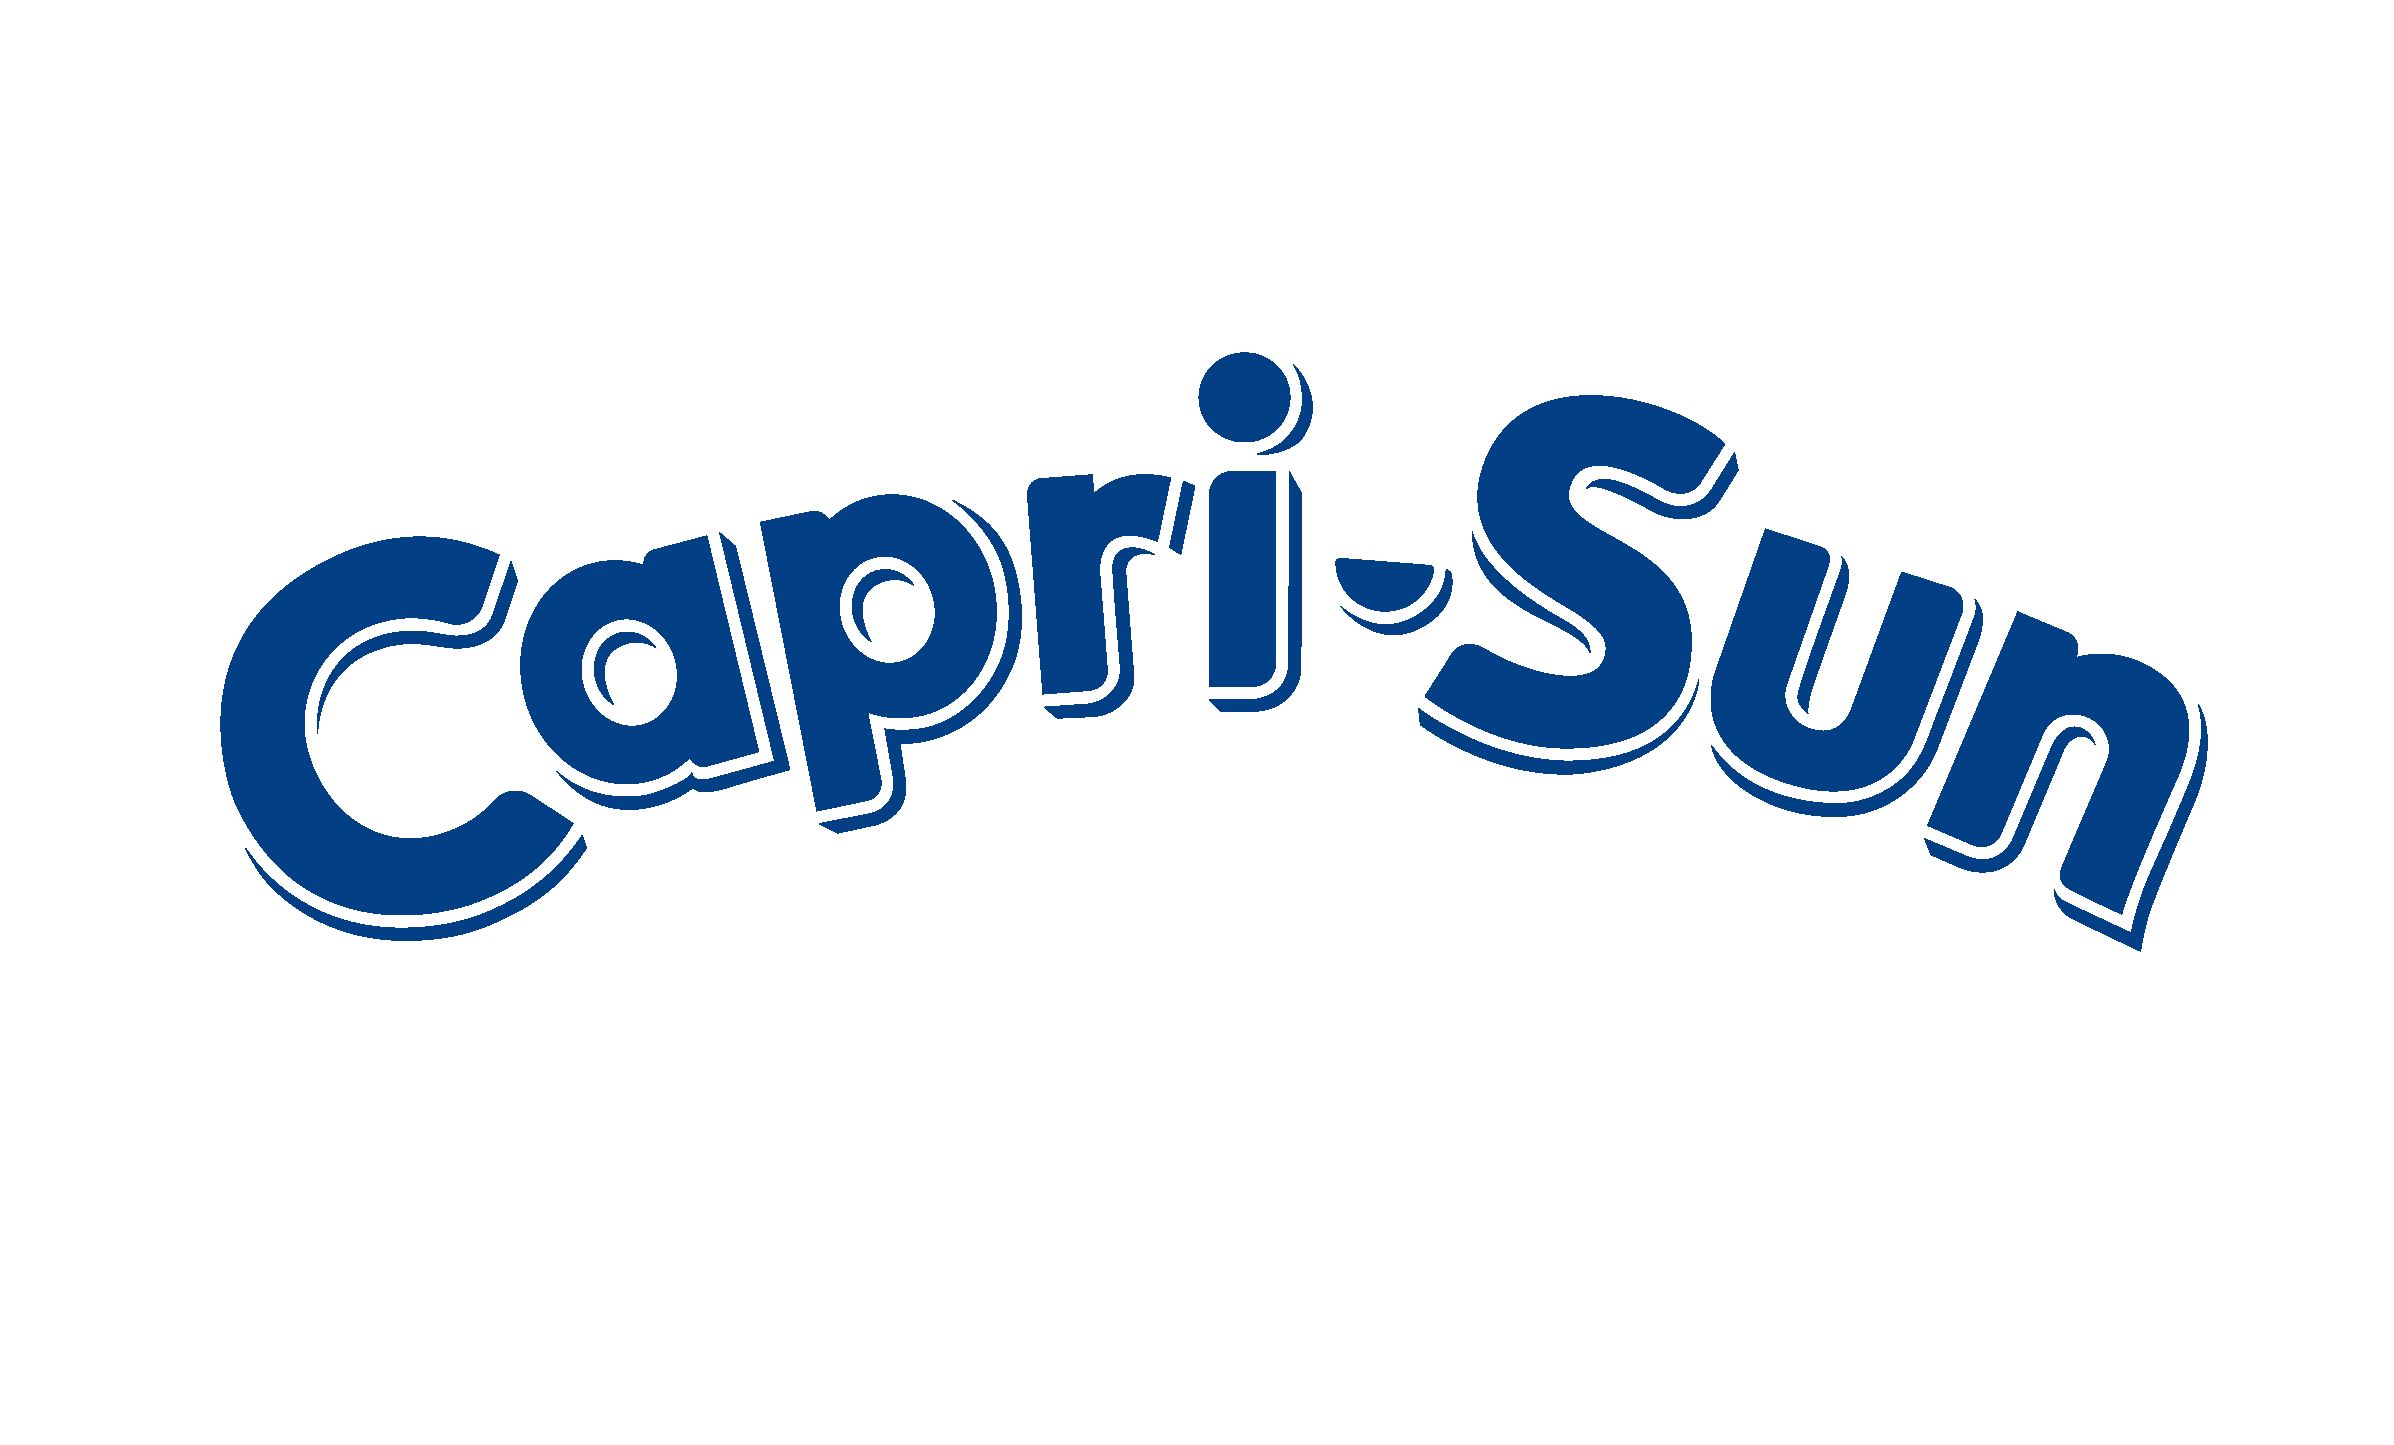 Capri sun